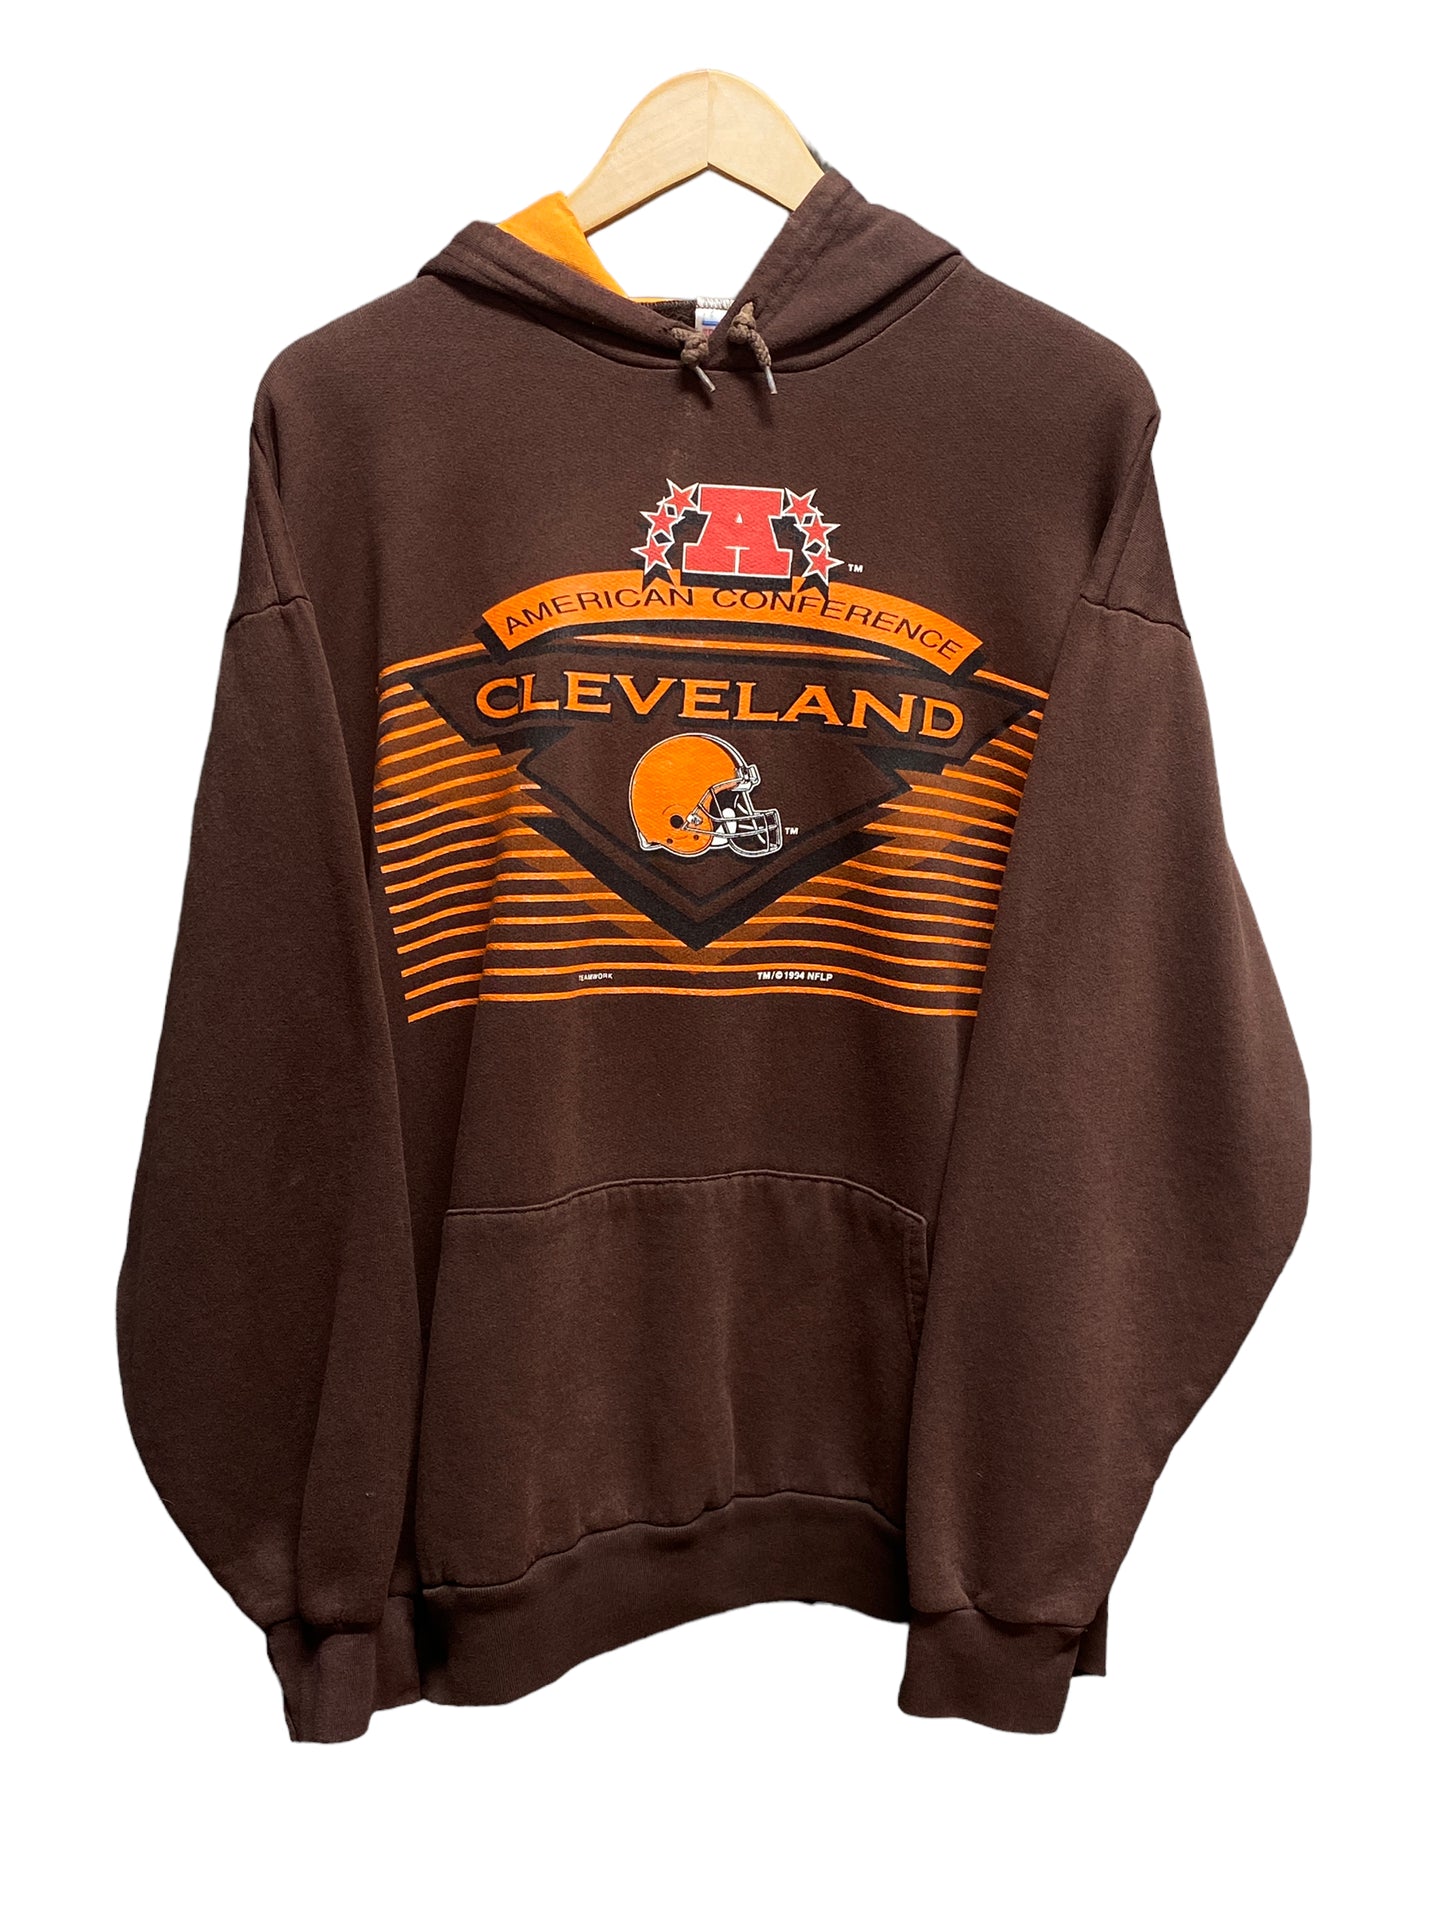 Vintage 1994 Cleveland Browns NFL Hoodie Size XL